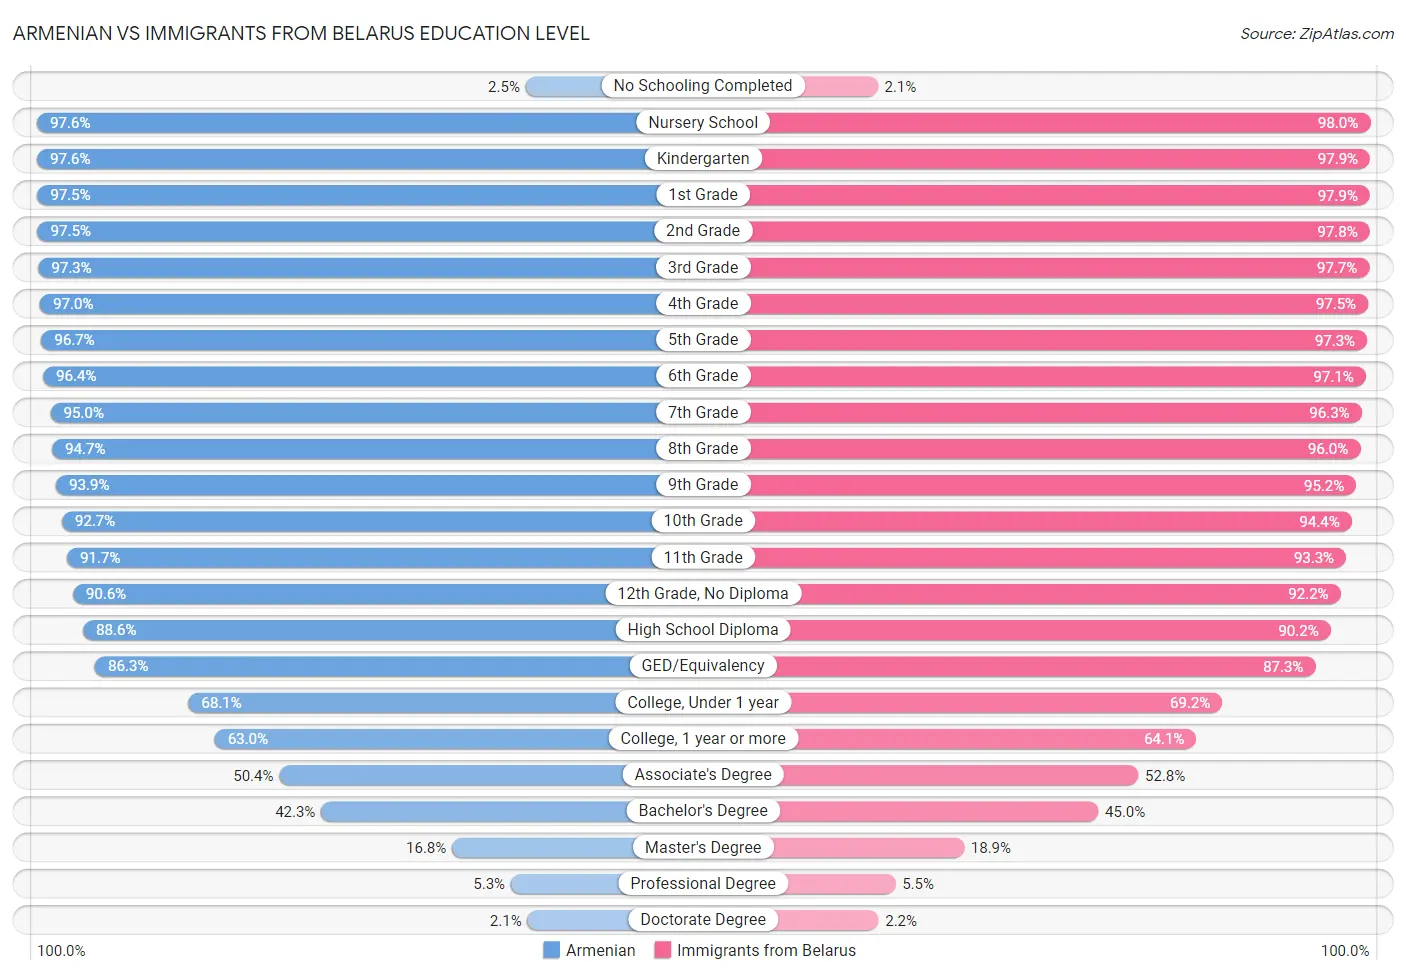 Armenian vs Immigrants from Belarus Education Level